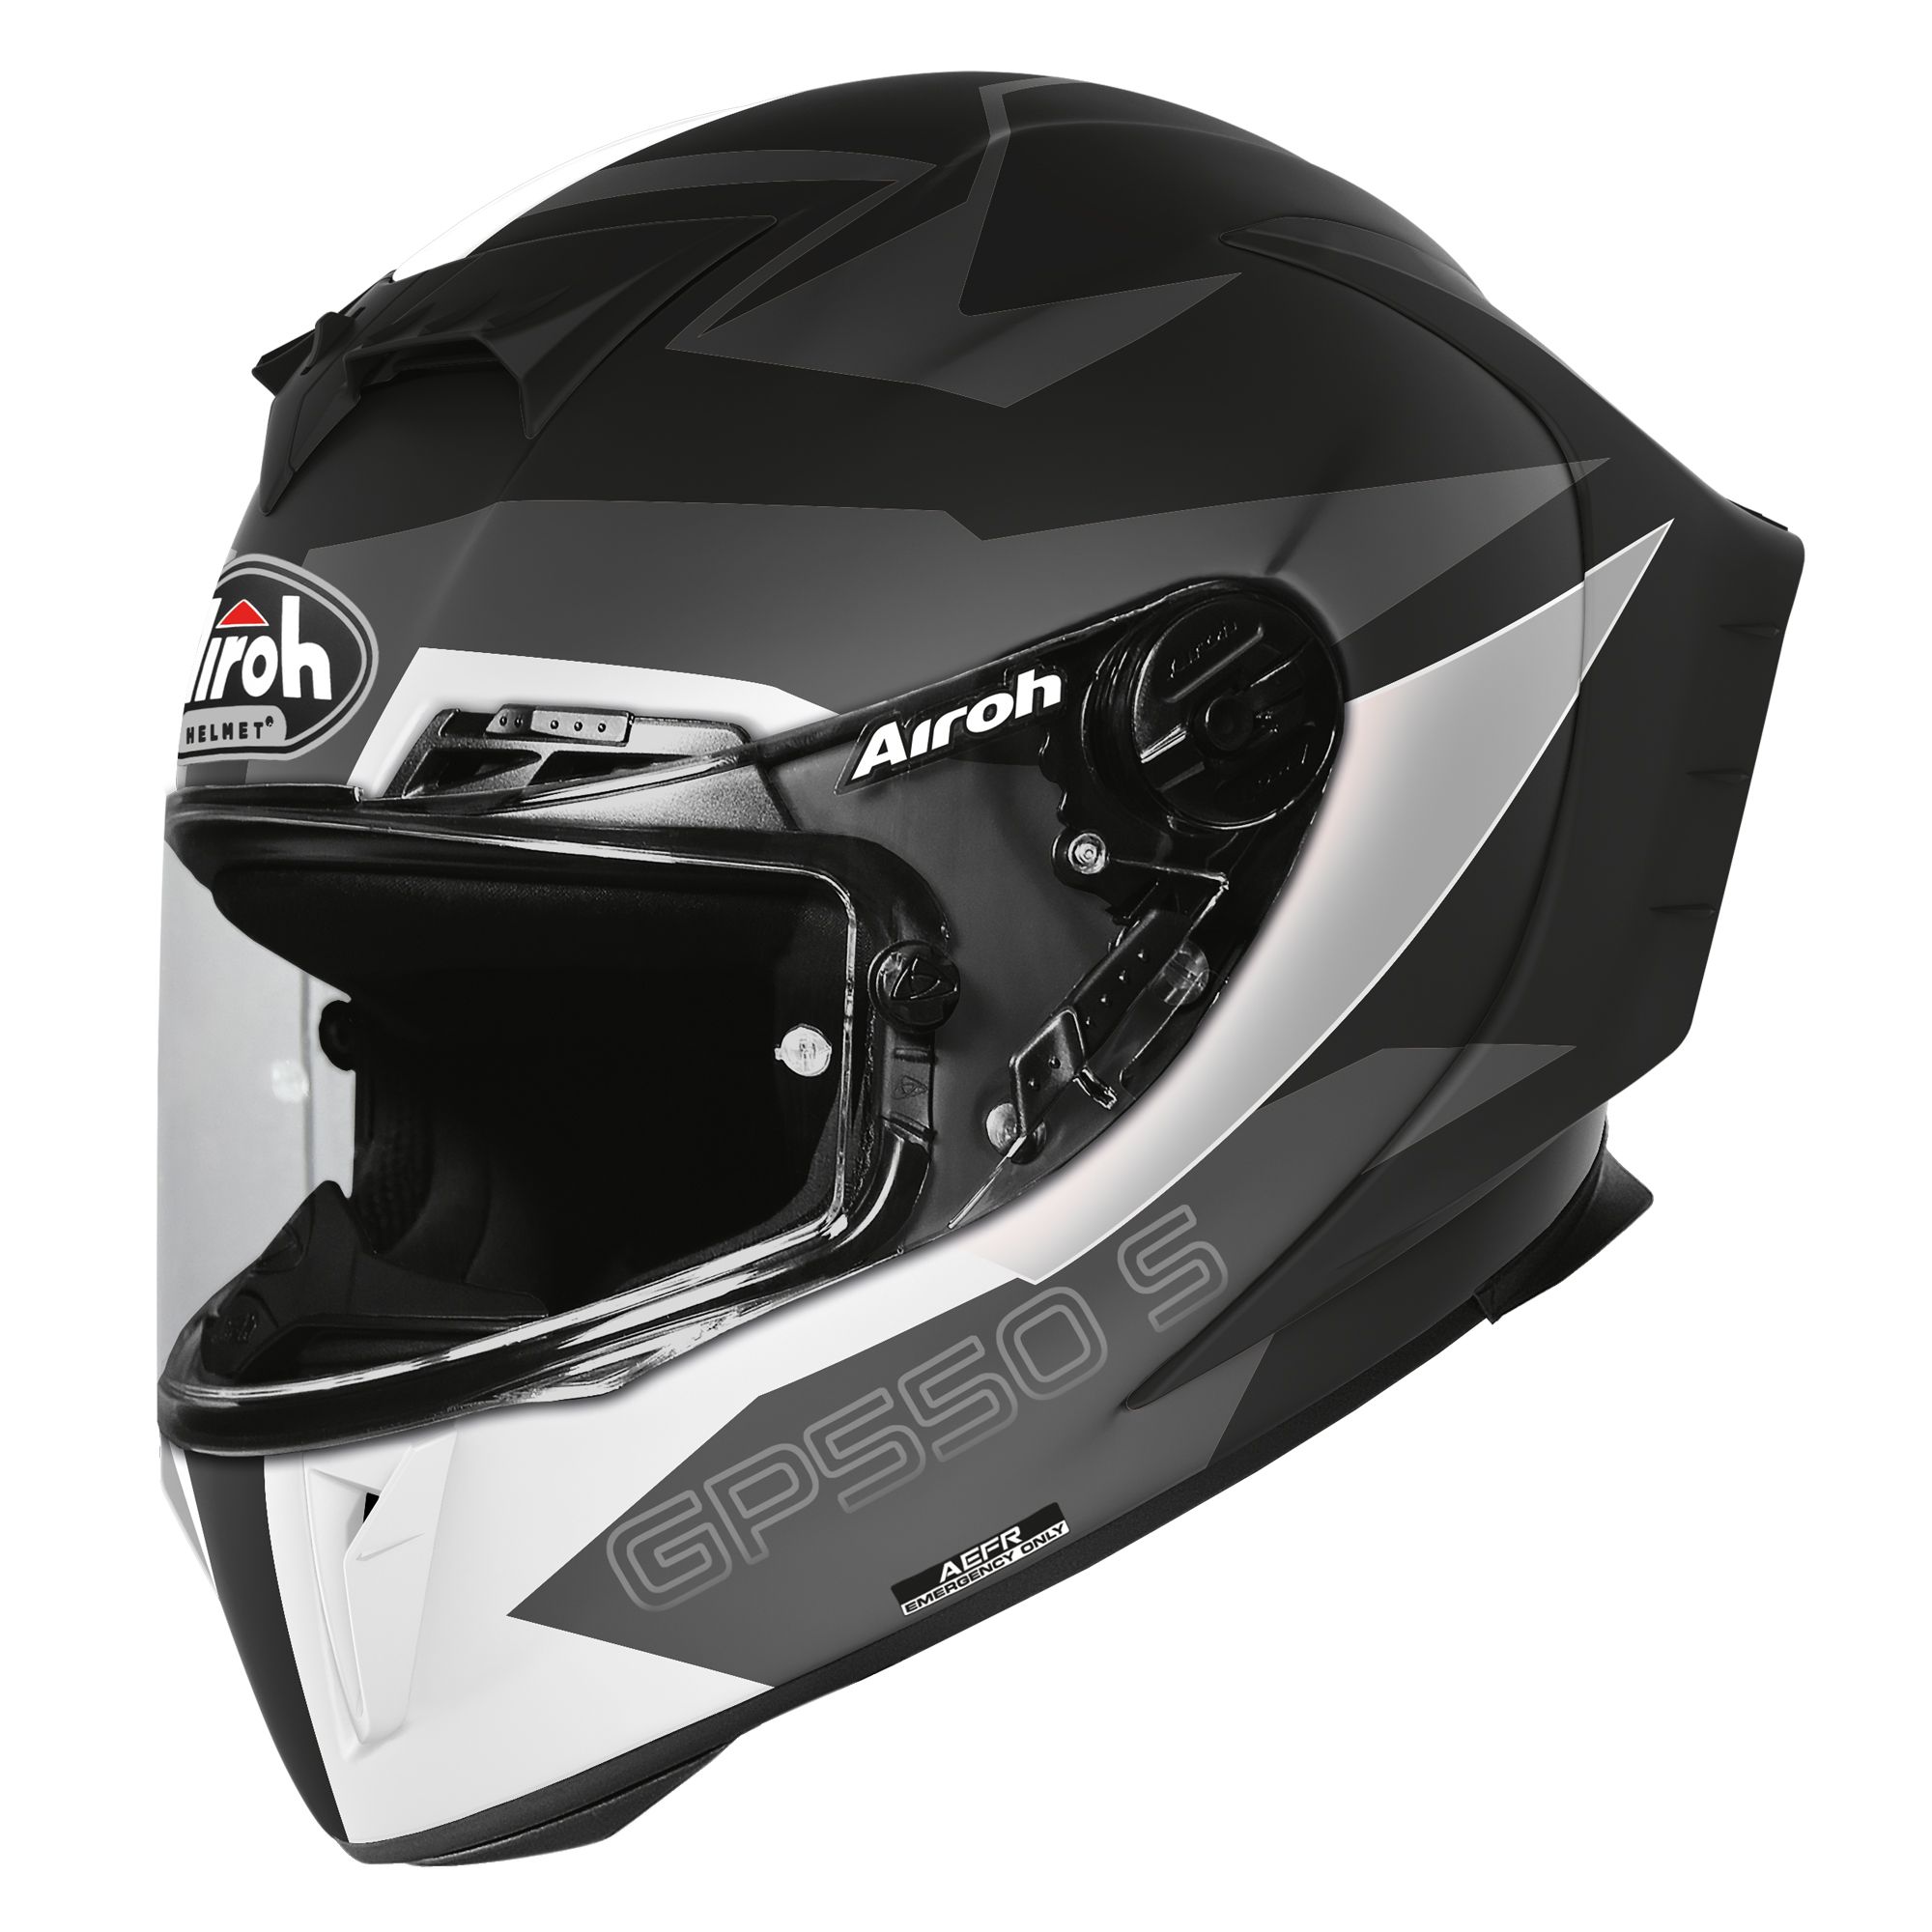 Airoh GP550S Full Face Helmet - Vektor Black Matt (SIZES XS to XL)